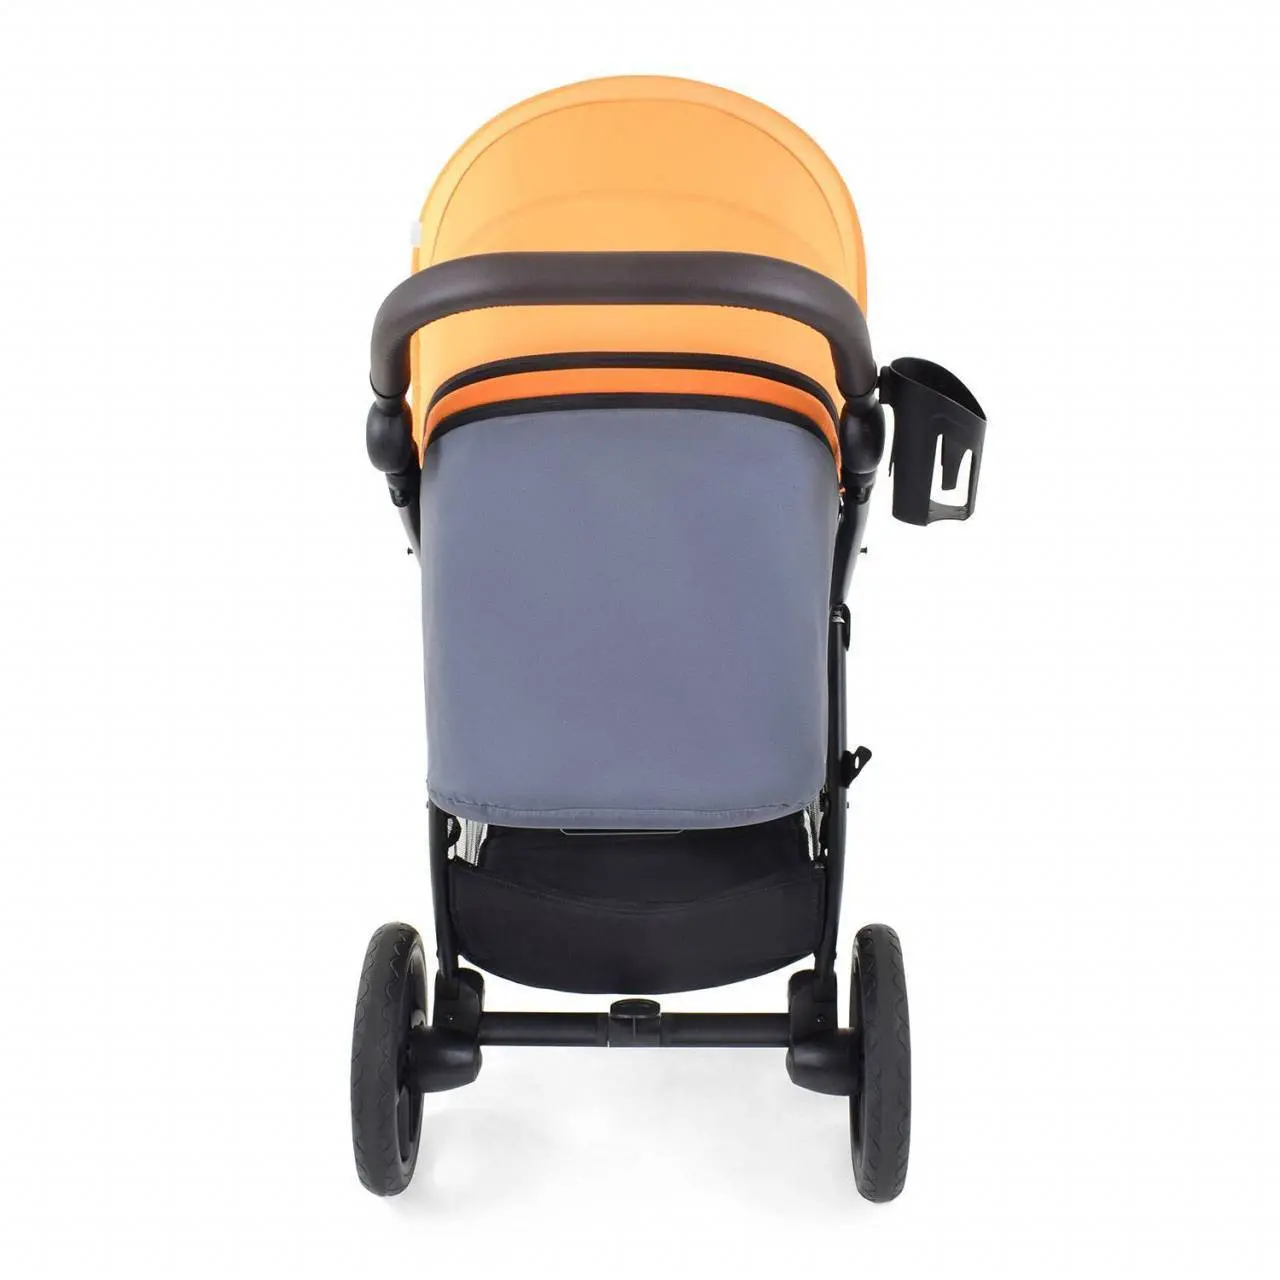 Коляска прогулочная Nuovita Modo Terreno цвет: Arancione grigio / Оранжево-серый